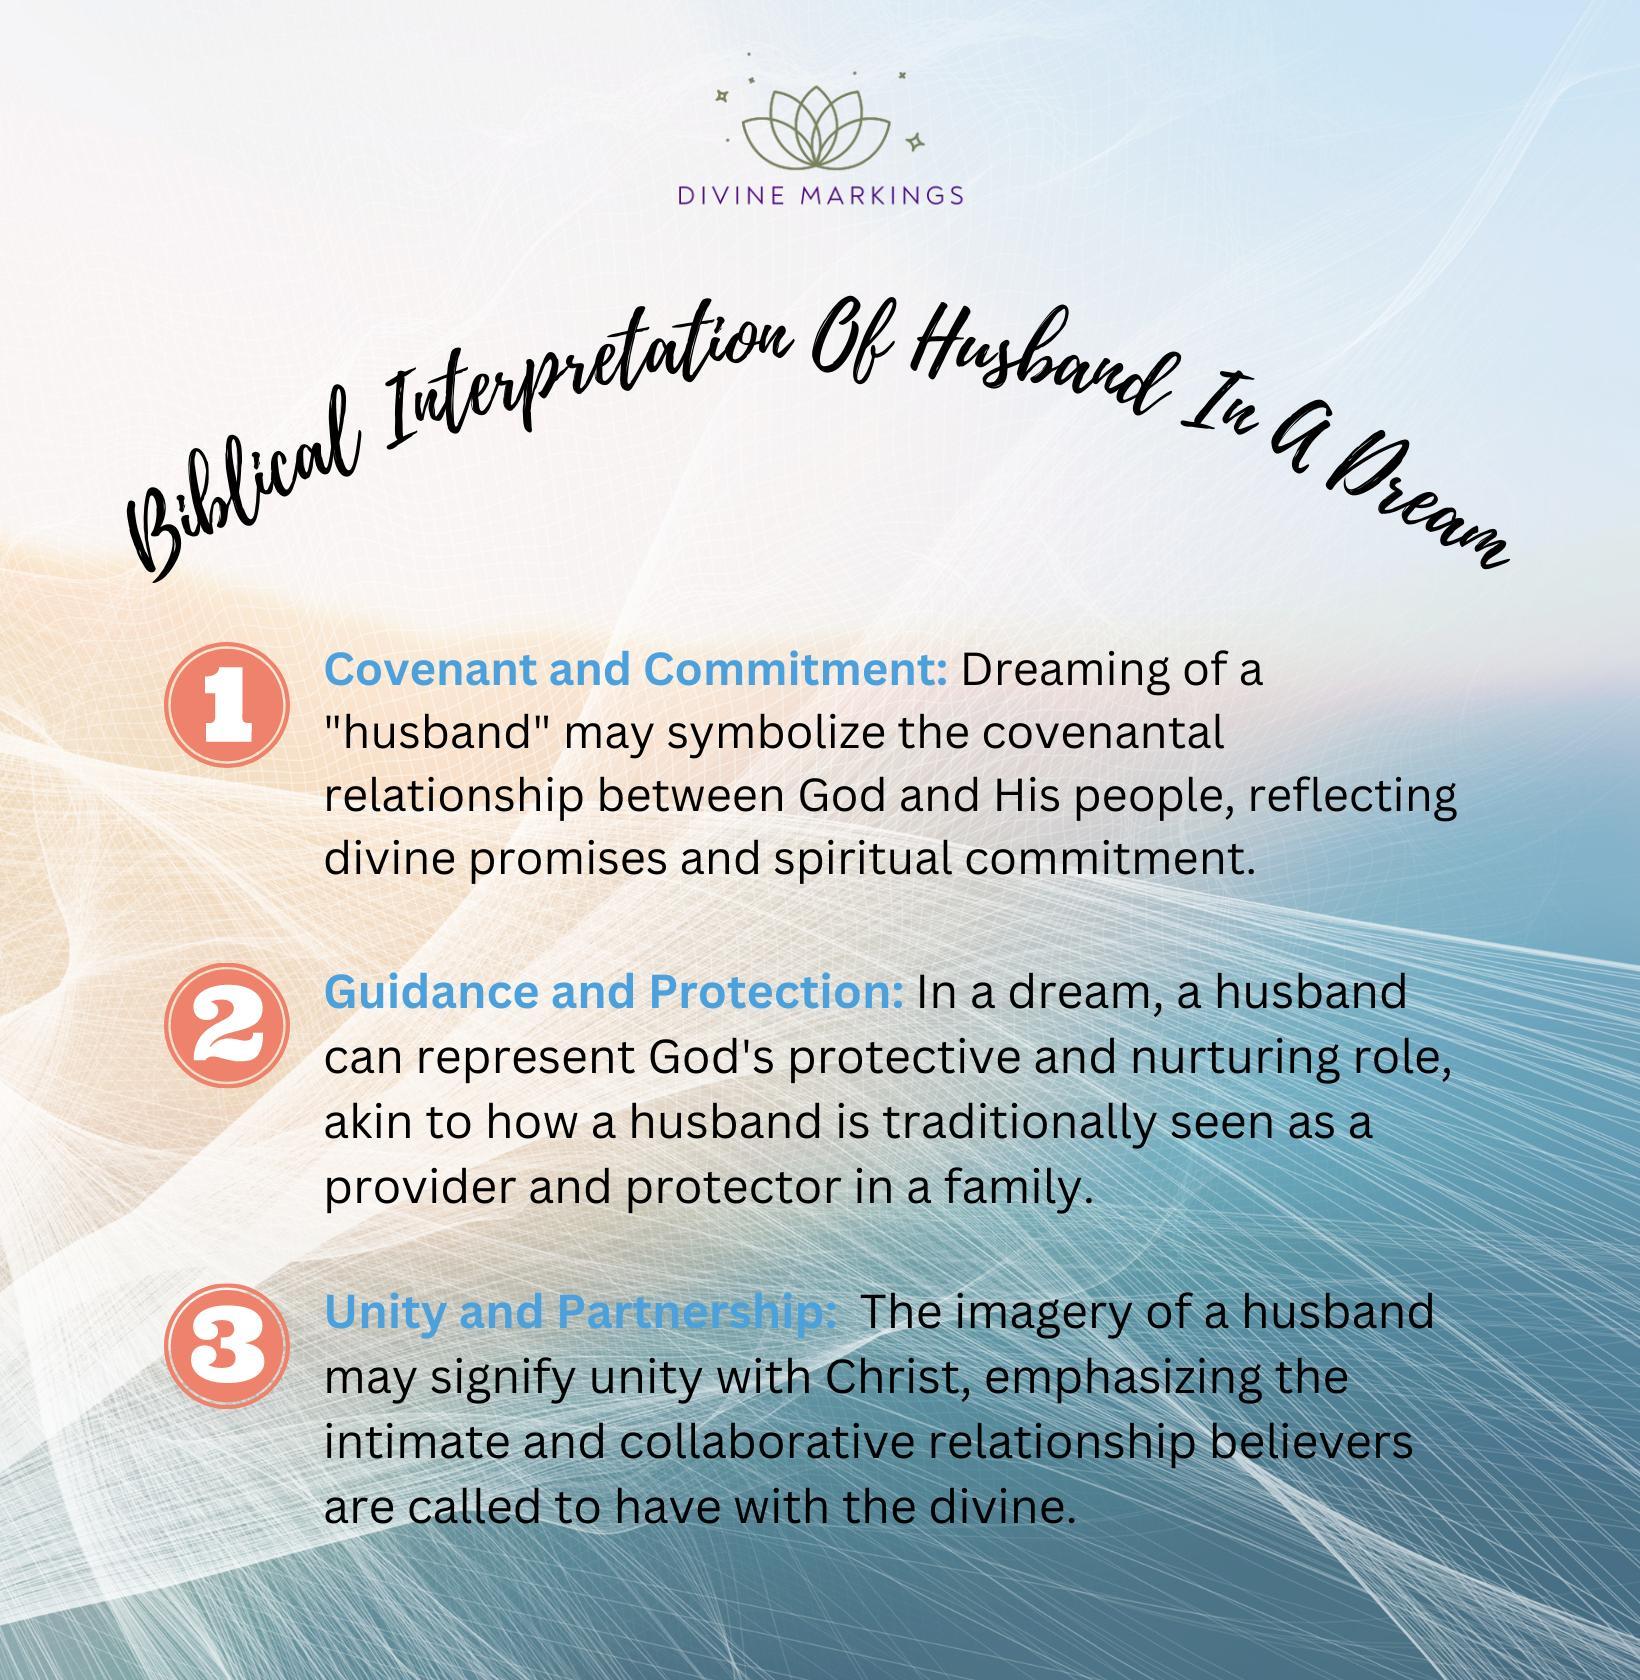 Biblical Interpretation Of Husband In A Dream - infographic